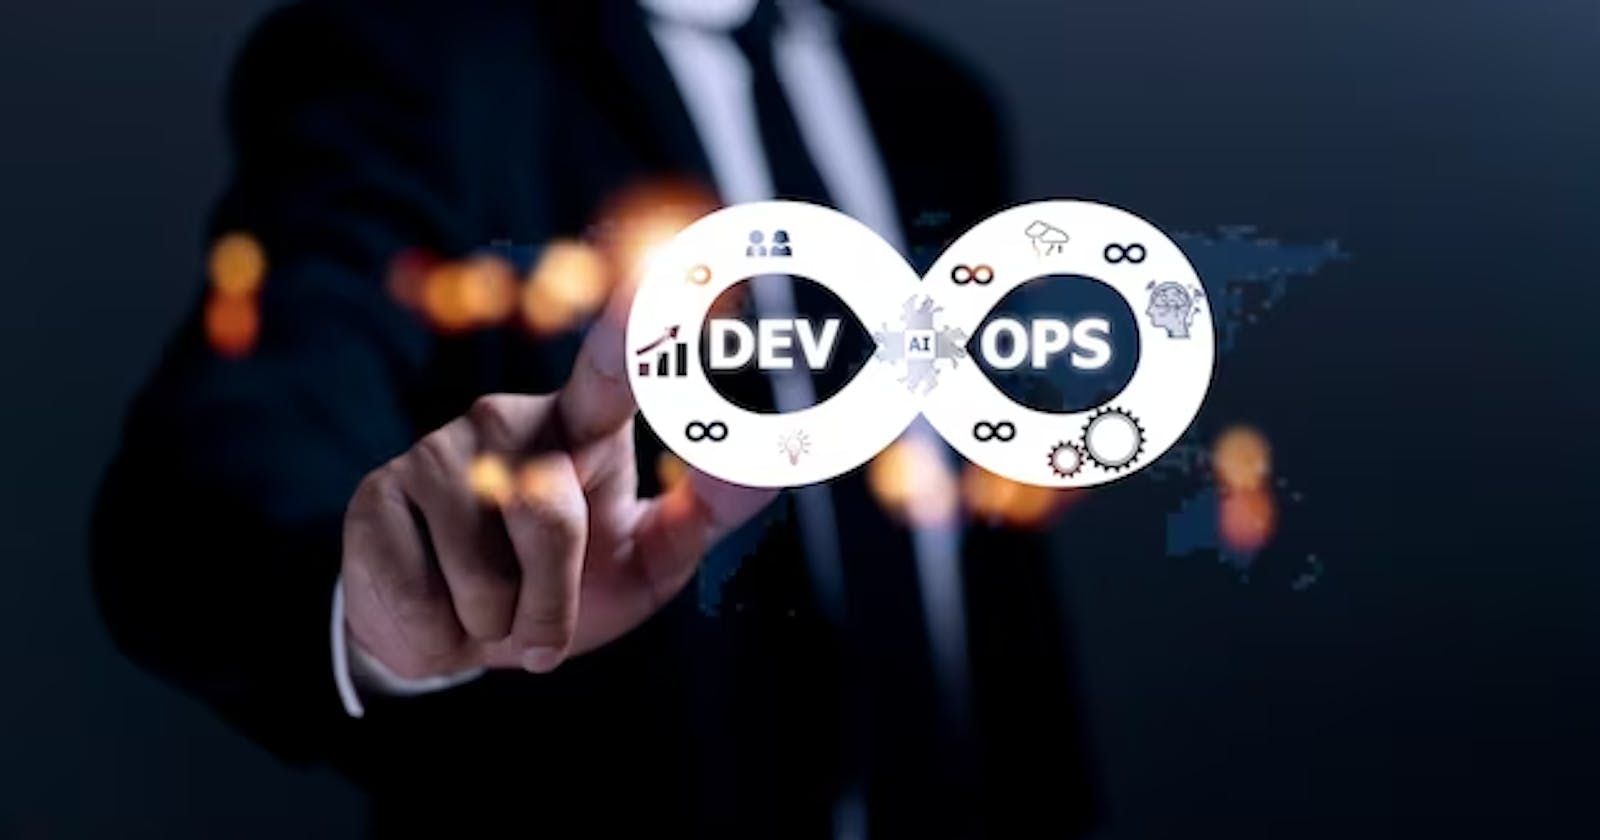 DevOps: Bridging the Gap Between Development and Operations